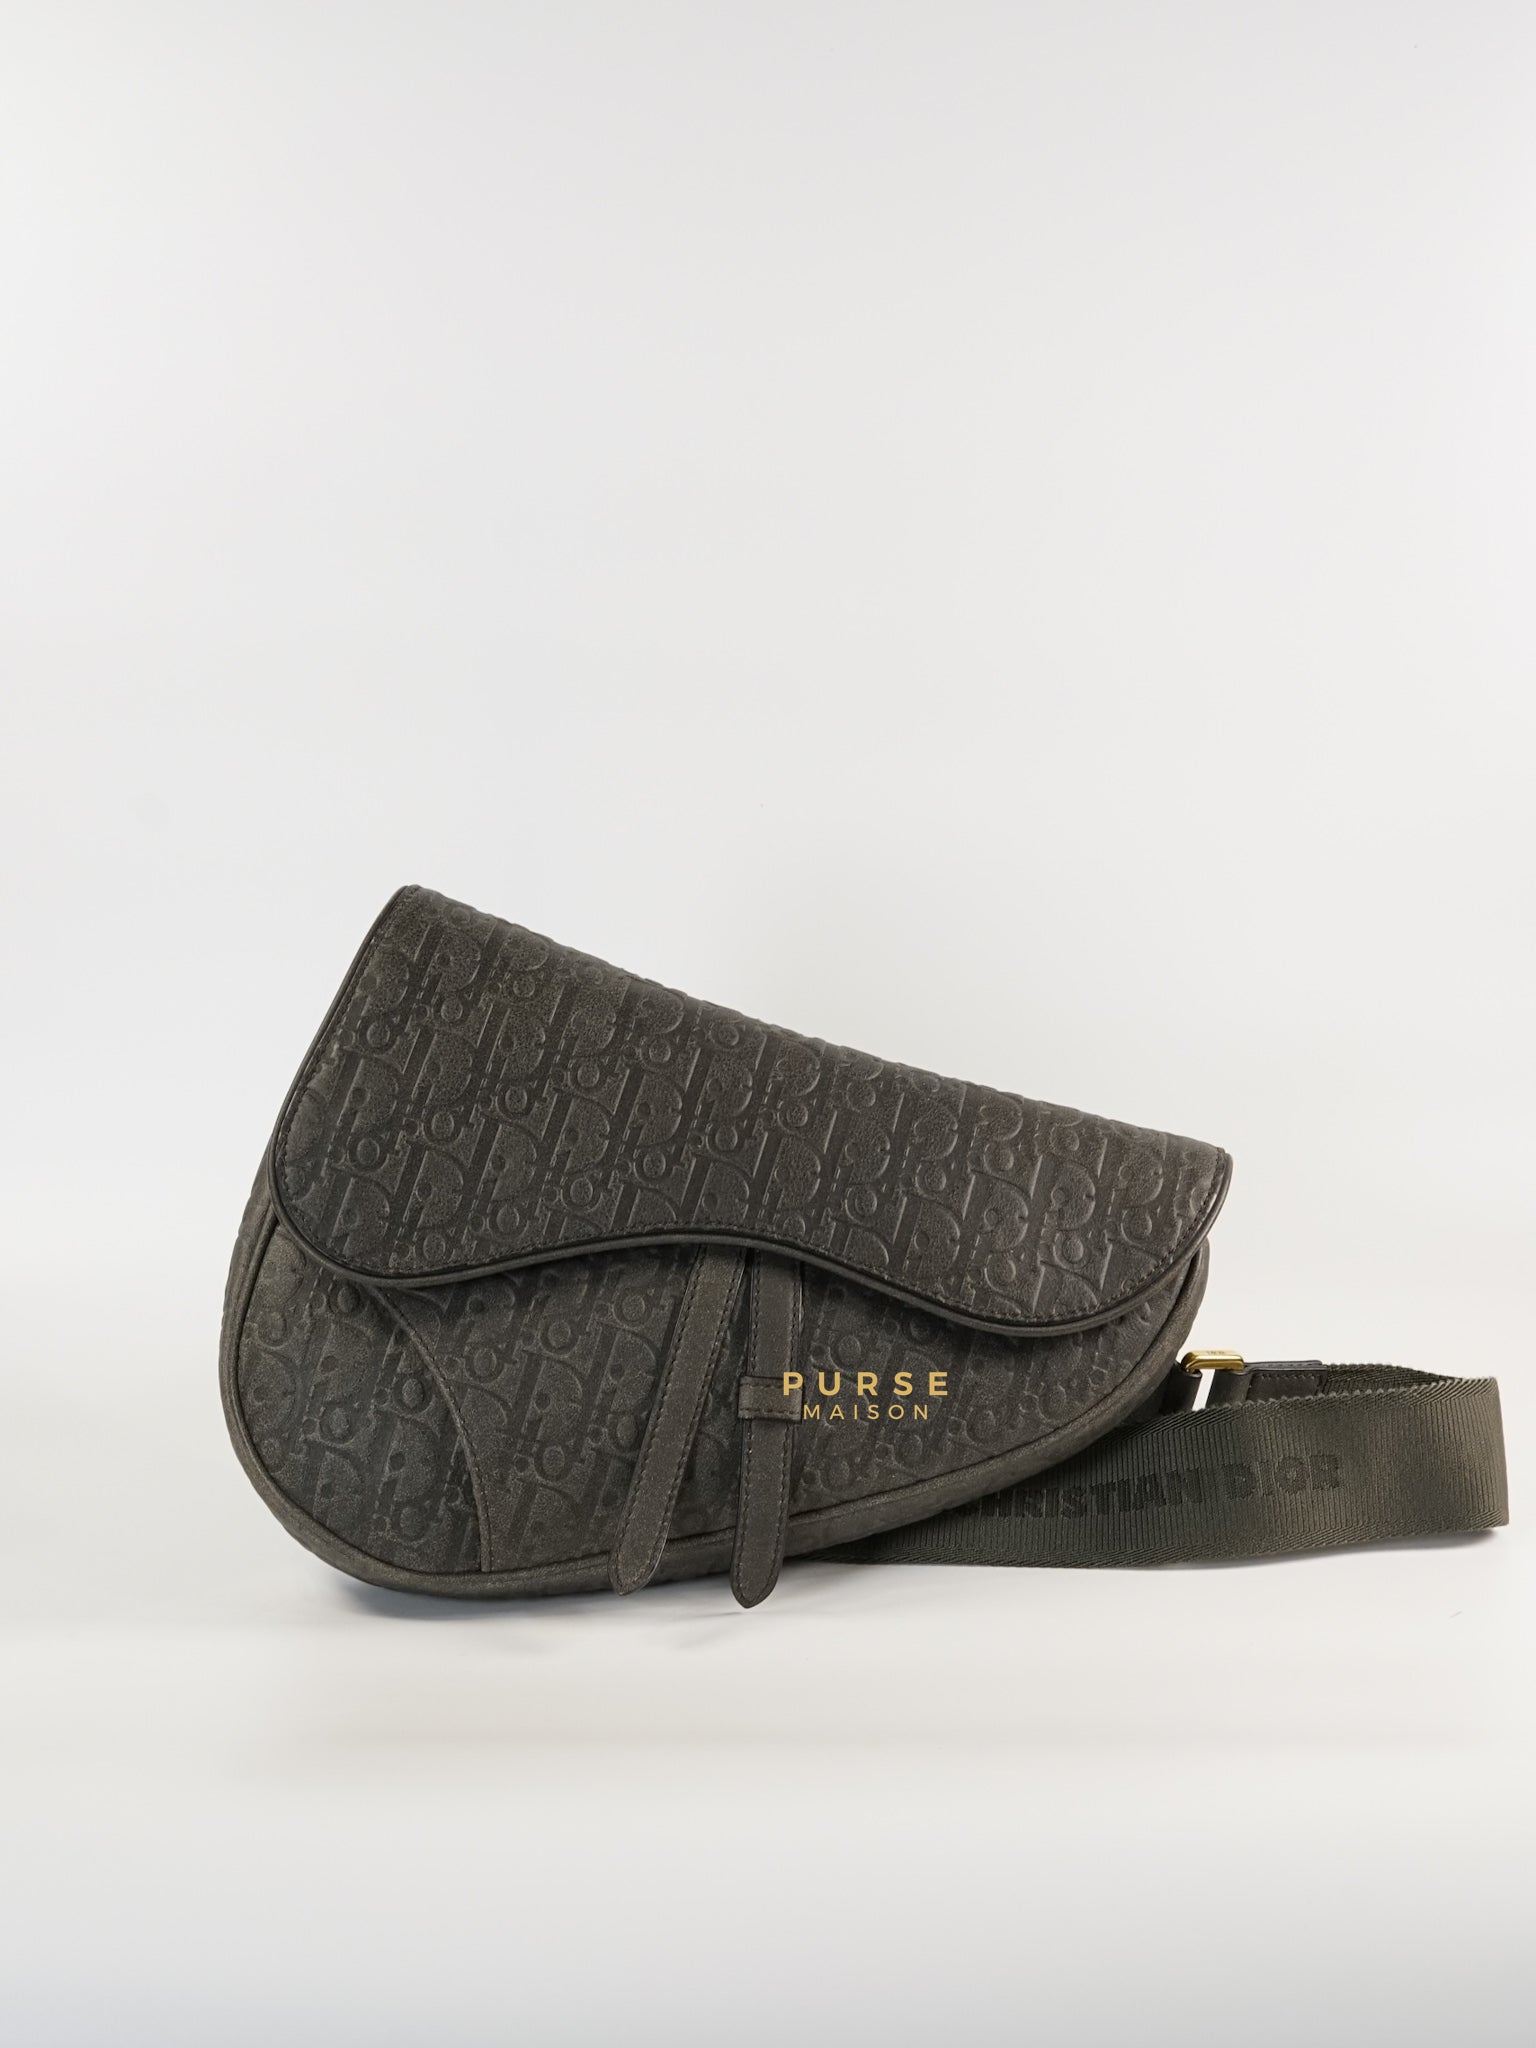 Saddle Homme Grunge in Dark Grey Oblique Body Bag for Men | Purse Maison Luxury Bags Shop